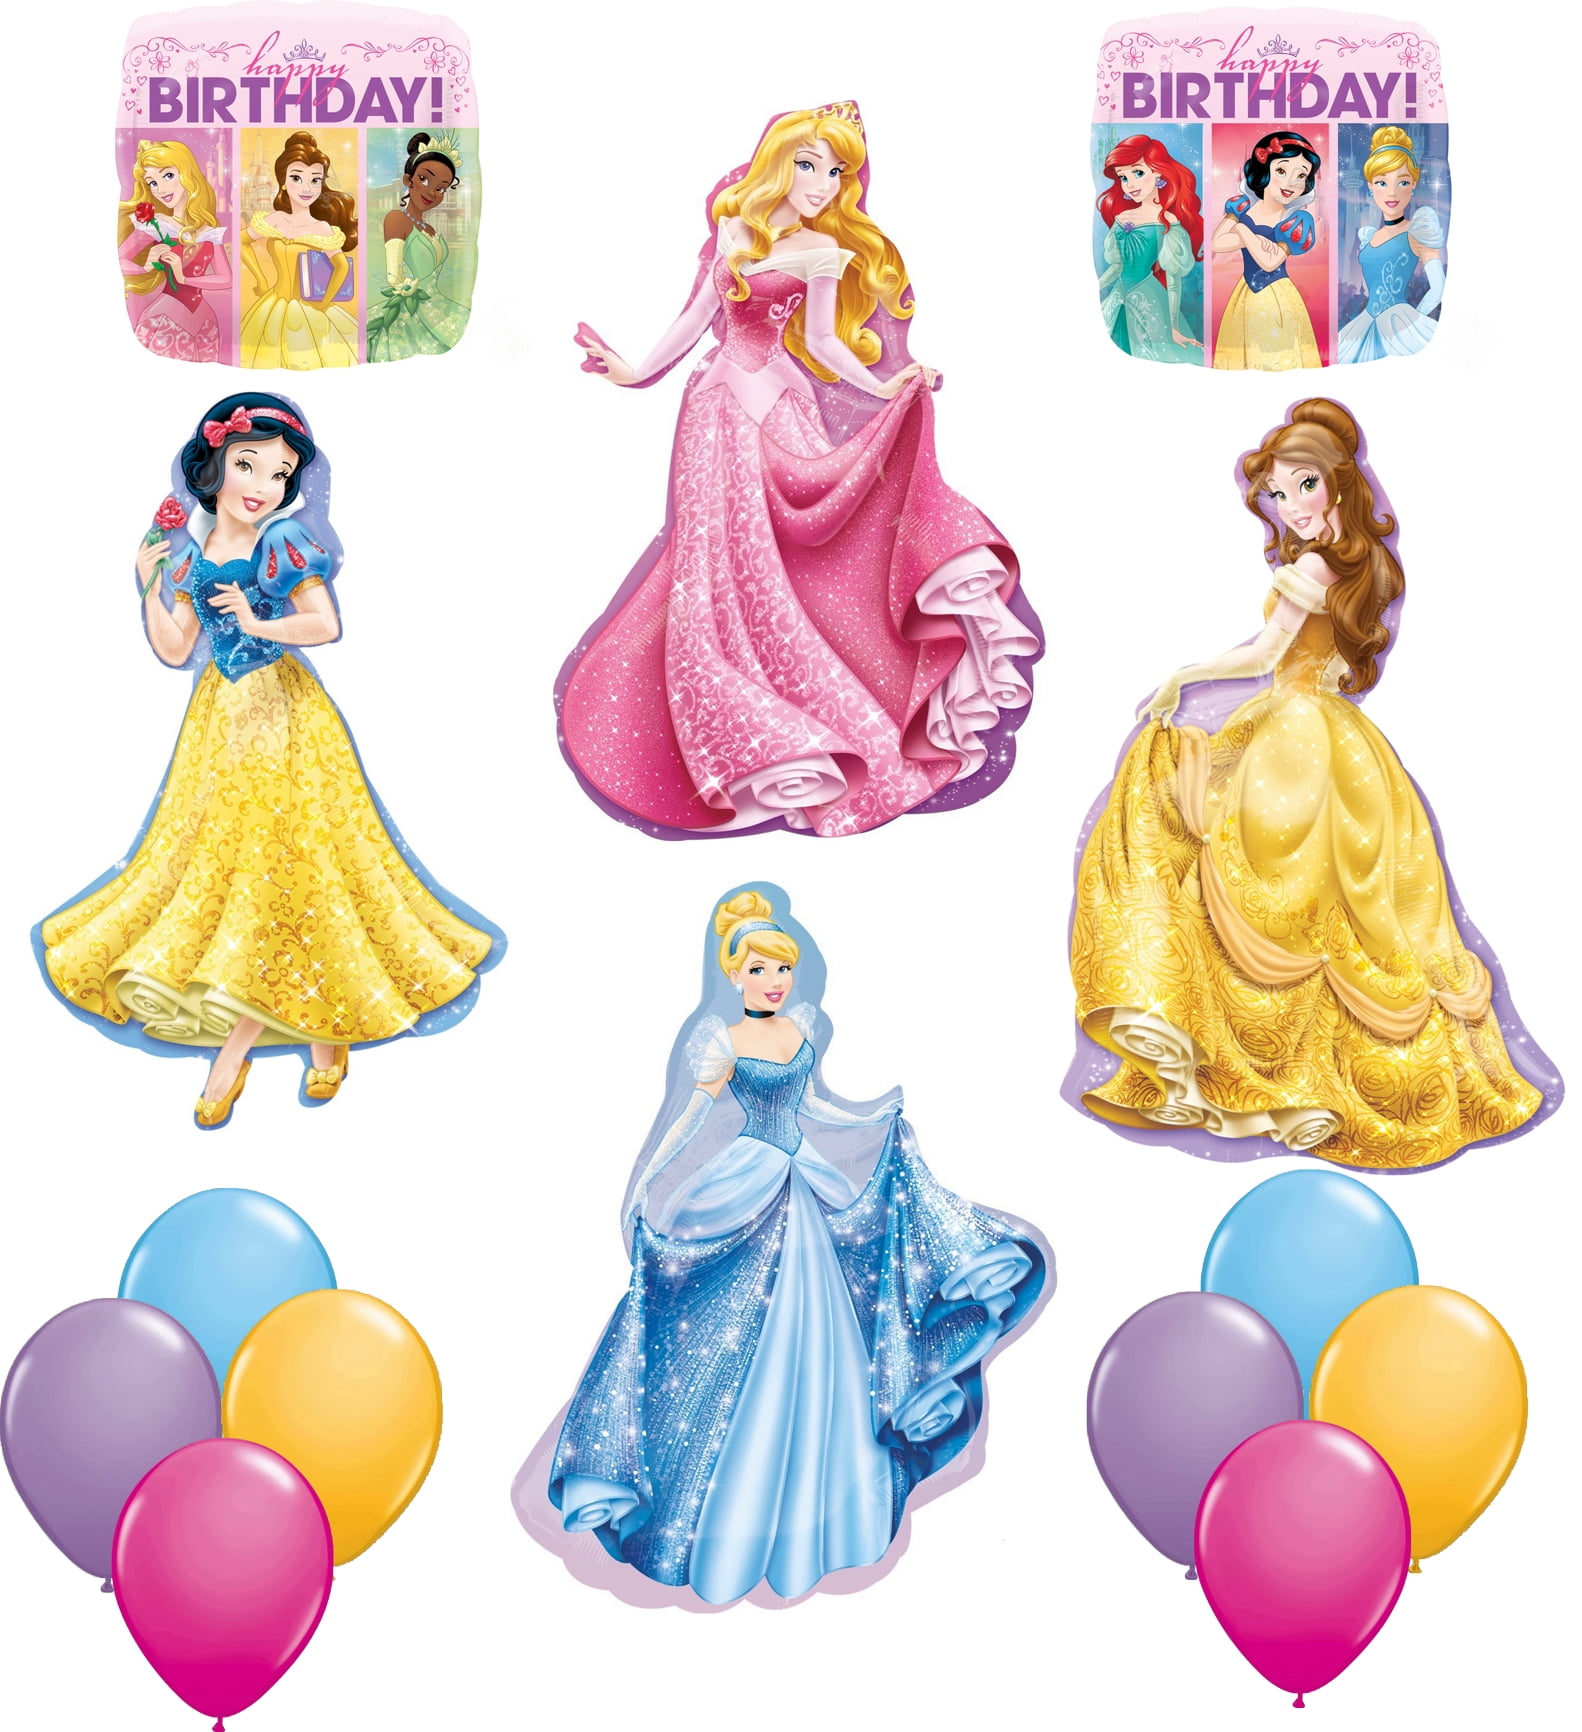 Ariel Belle Sleeping Beauty Snow White Cinderella Disney Princess Mylar Balloons